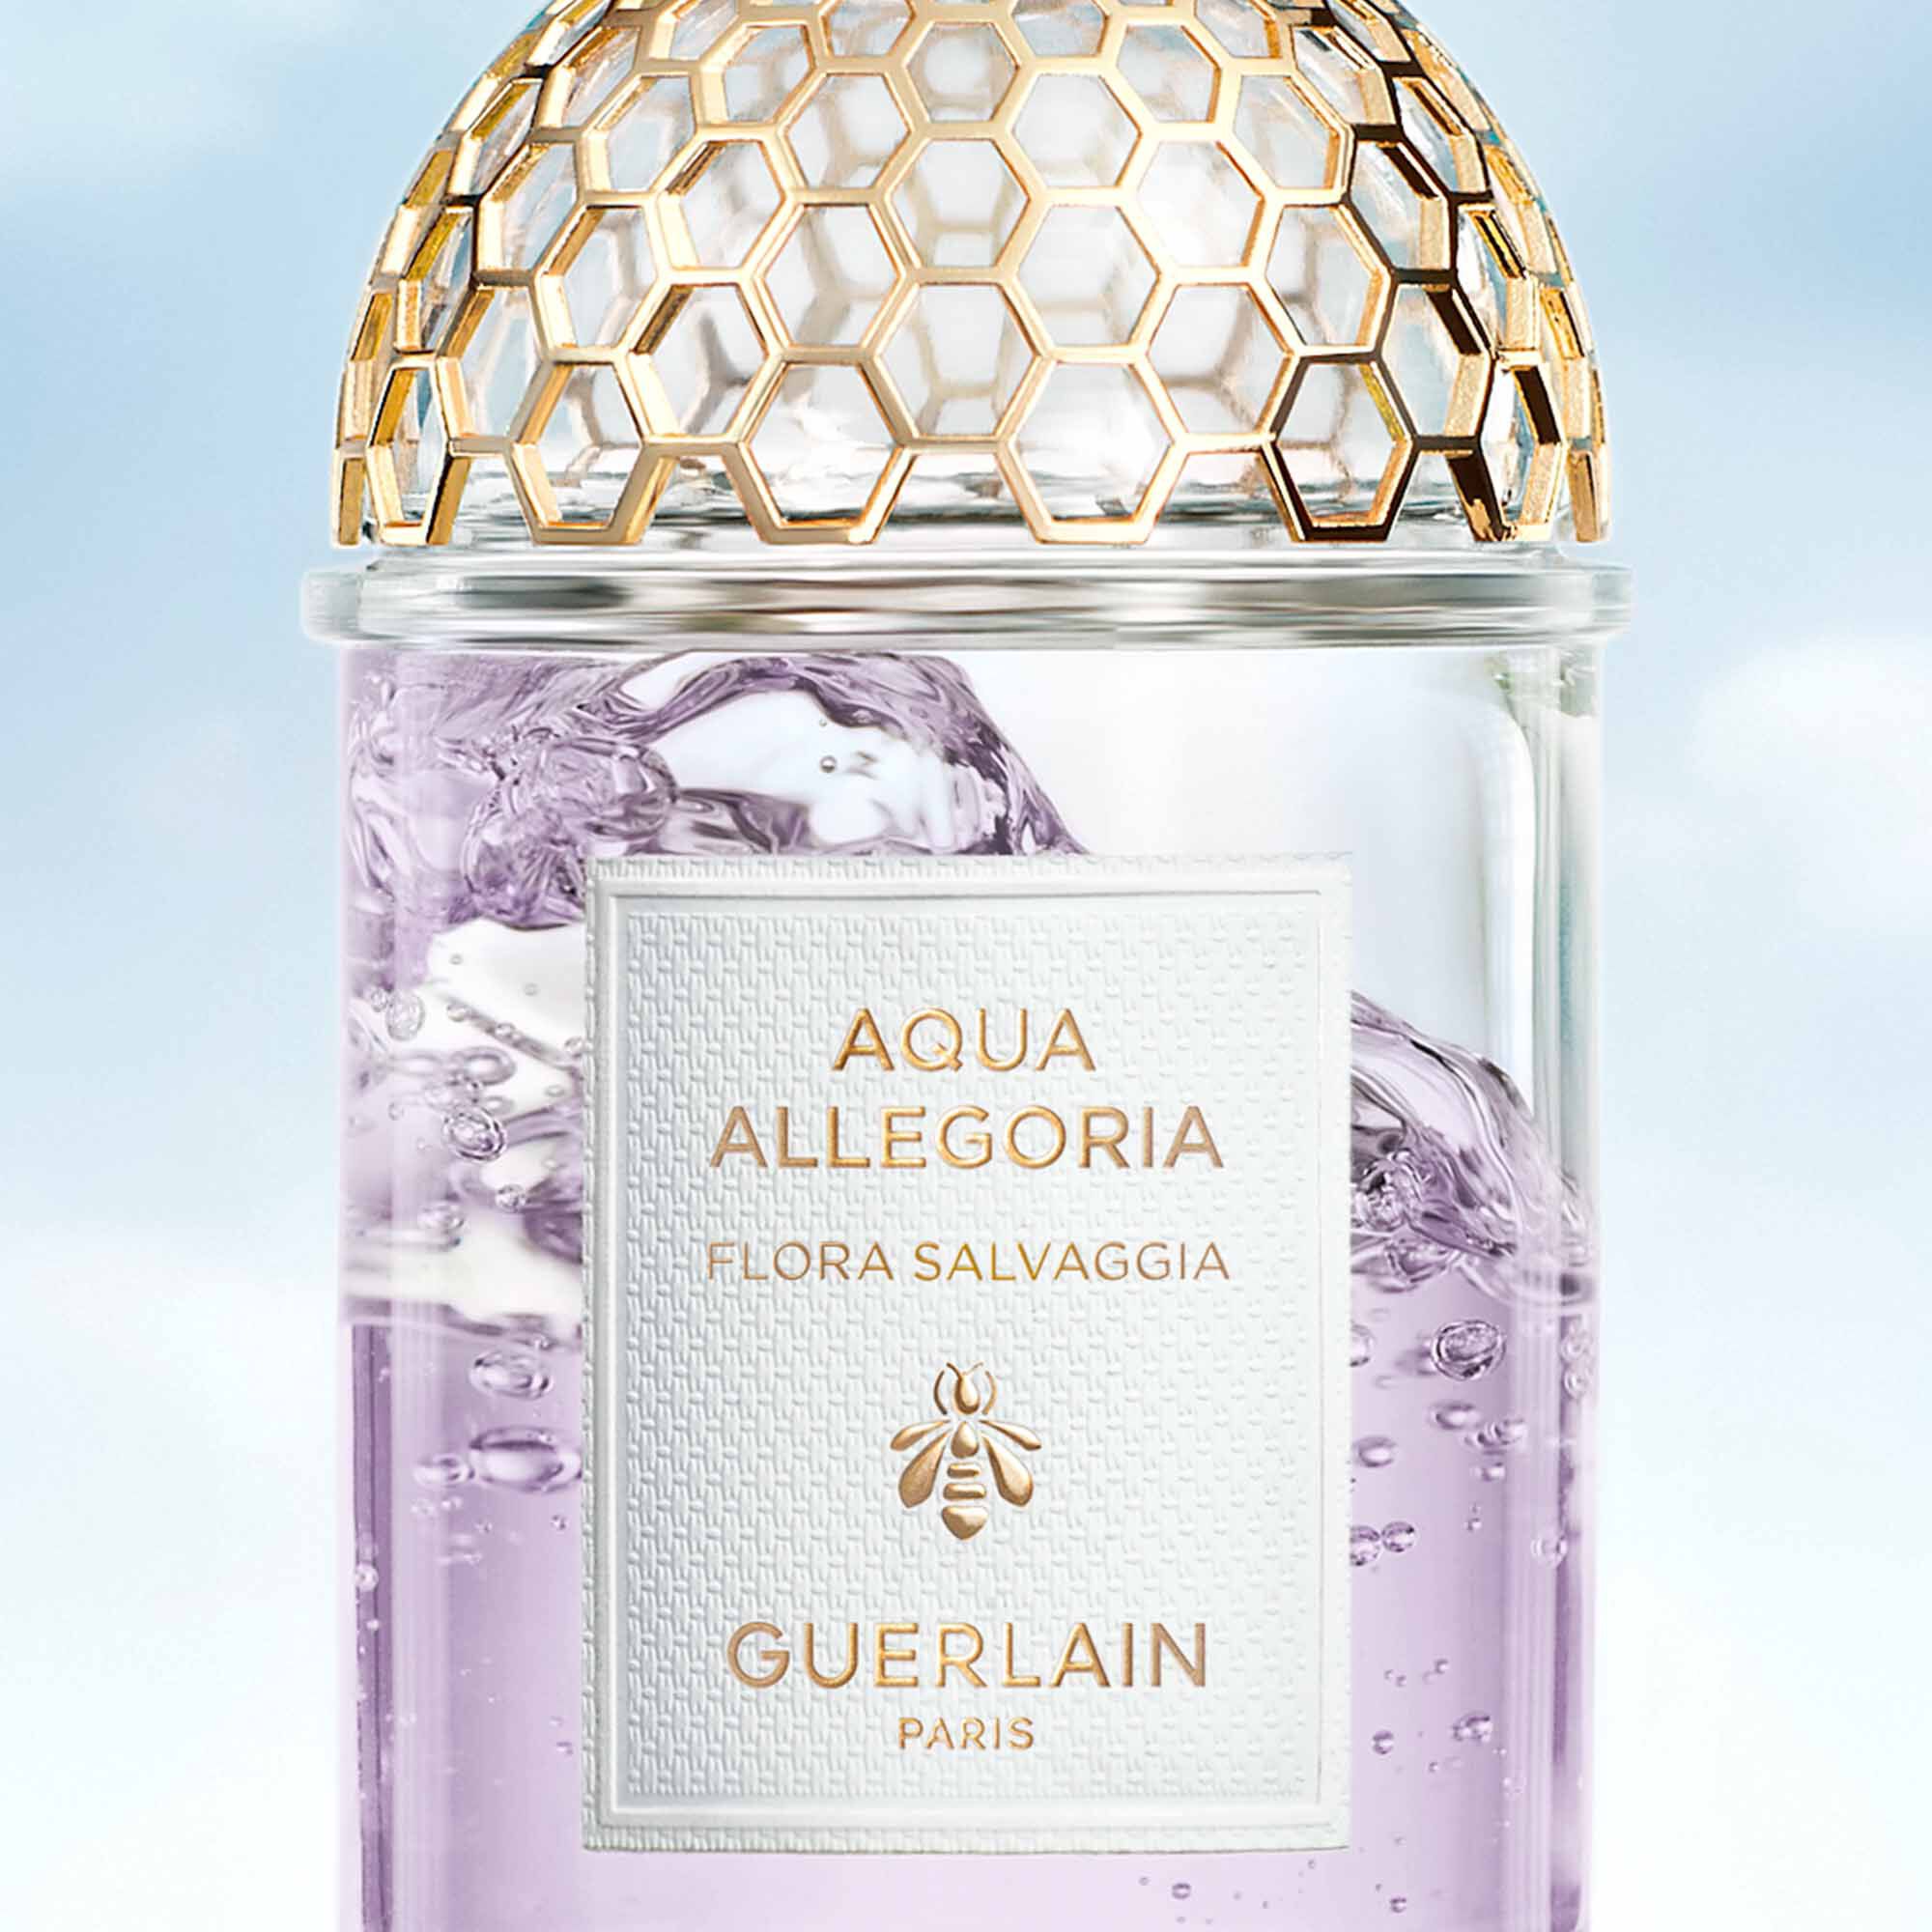 Aqua Allegoria ⋅ Flora Salvaggia – Eau de Toilette Refill ⋅ GUERLAIN